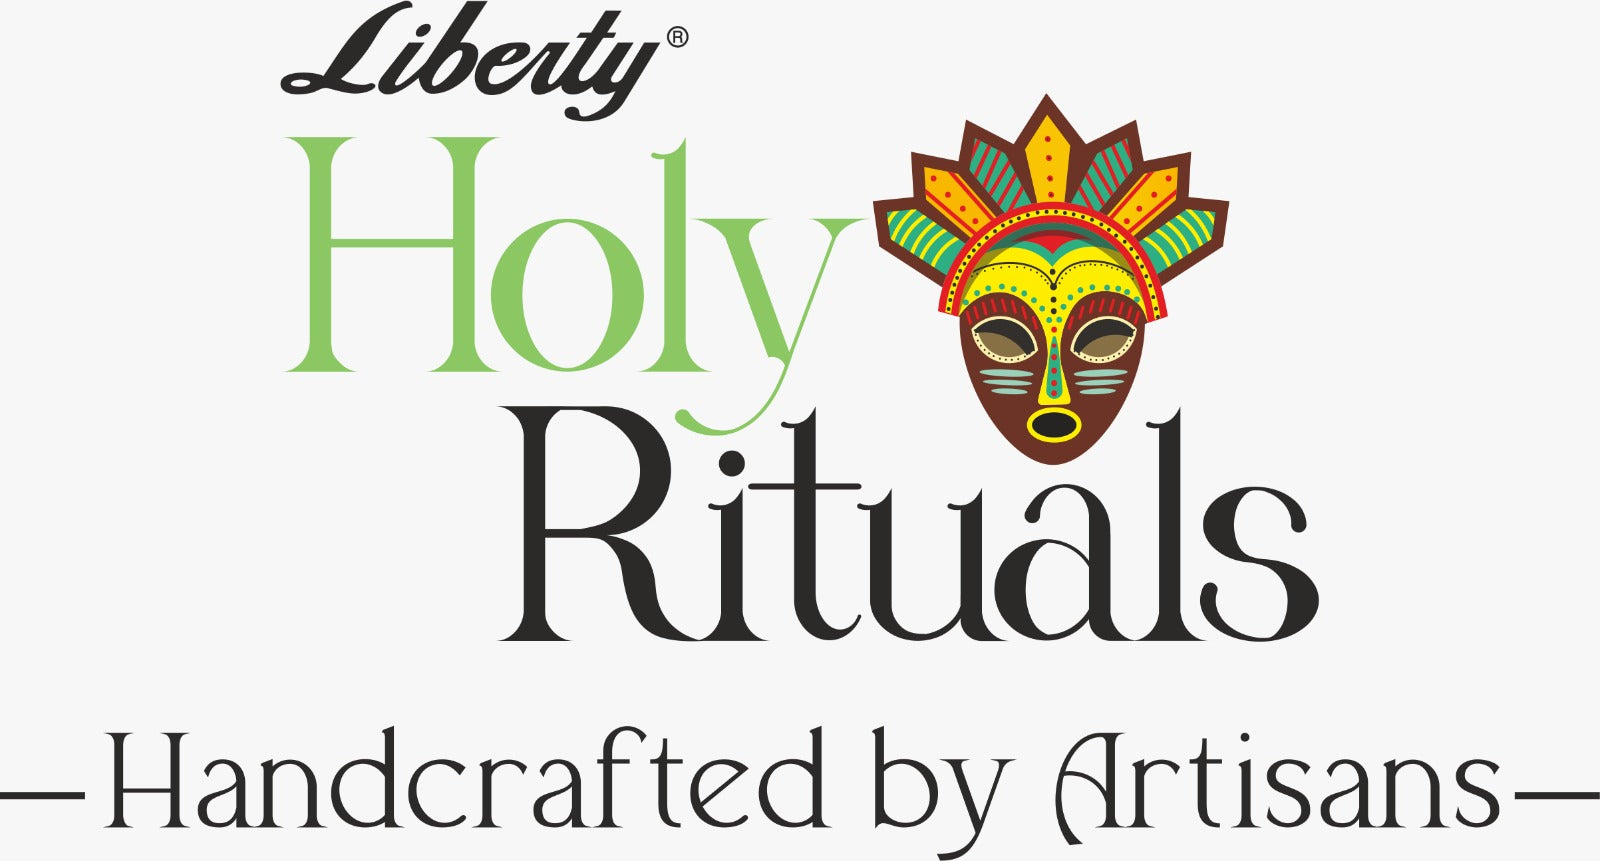 Holy Rituals